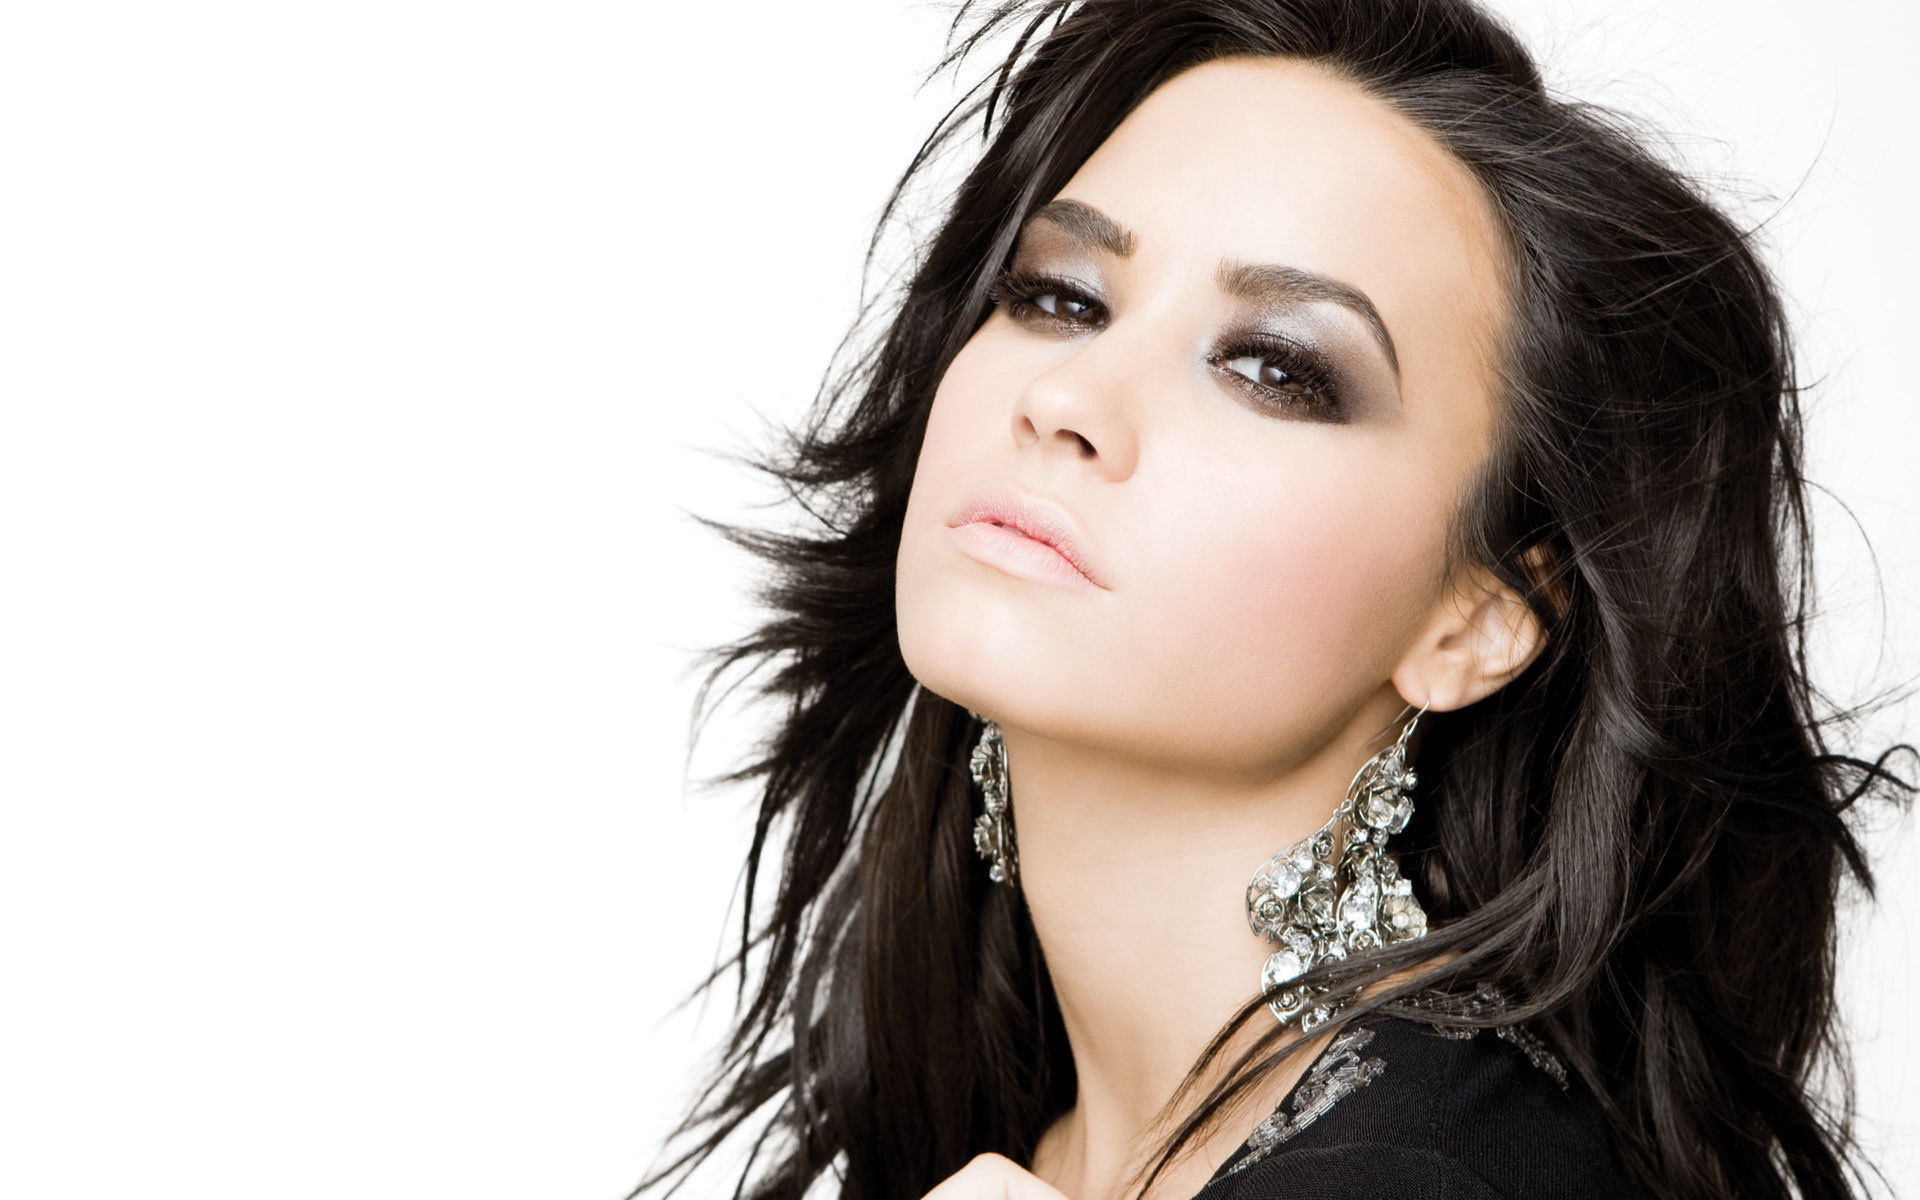 Handy-Wallpaper Musik, Demi Lovato kostenlos herunterladen.